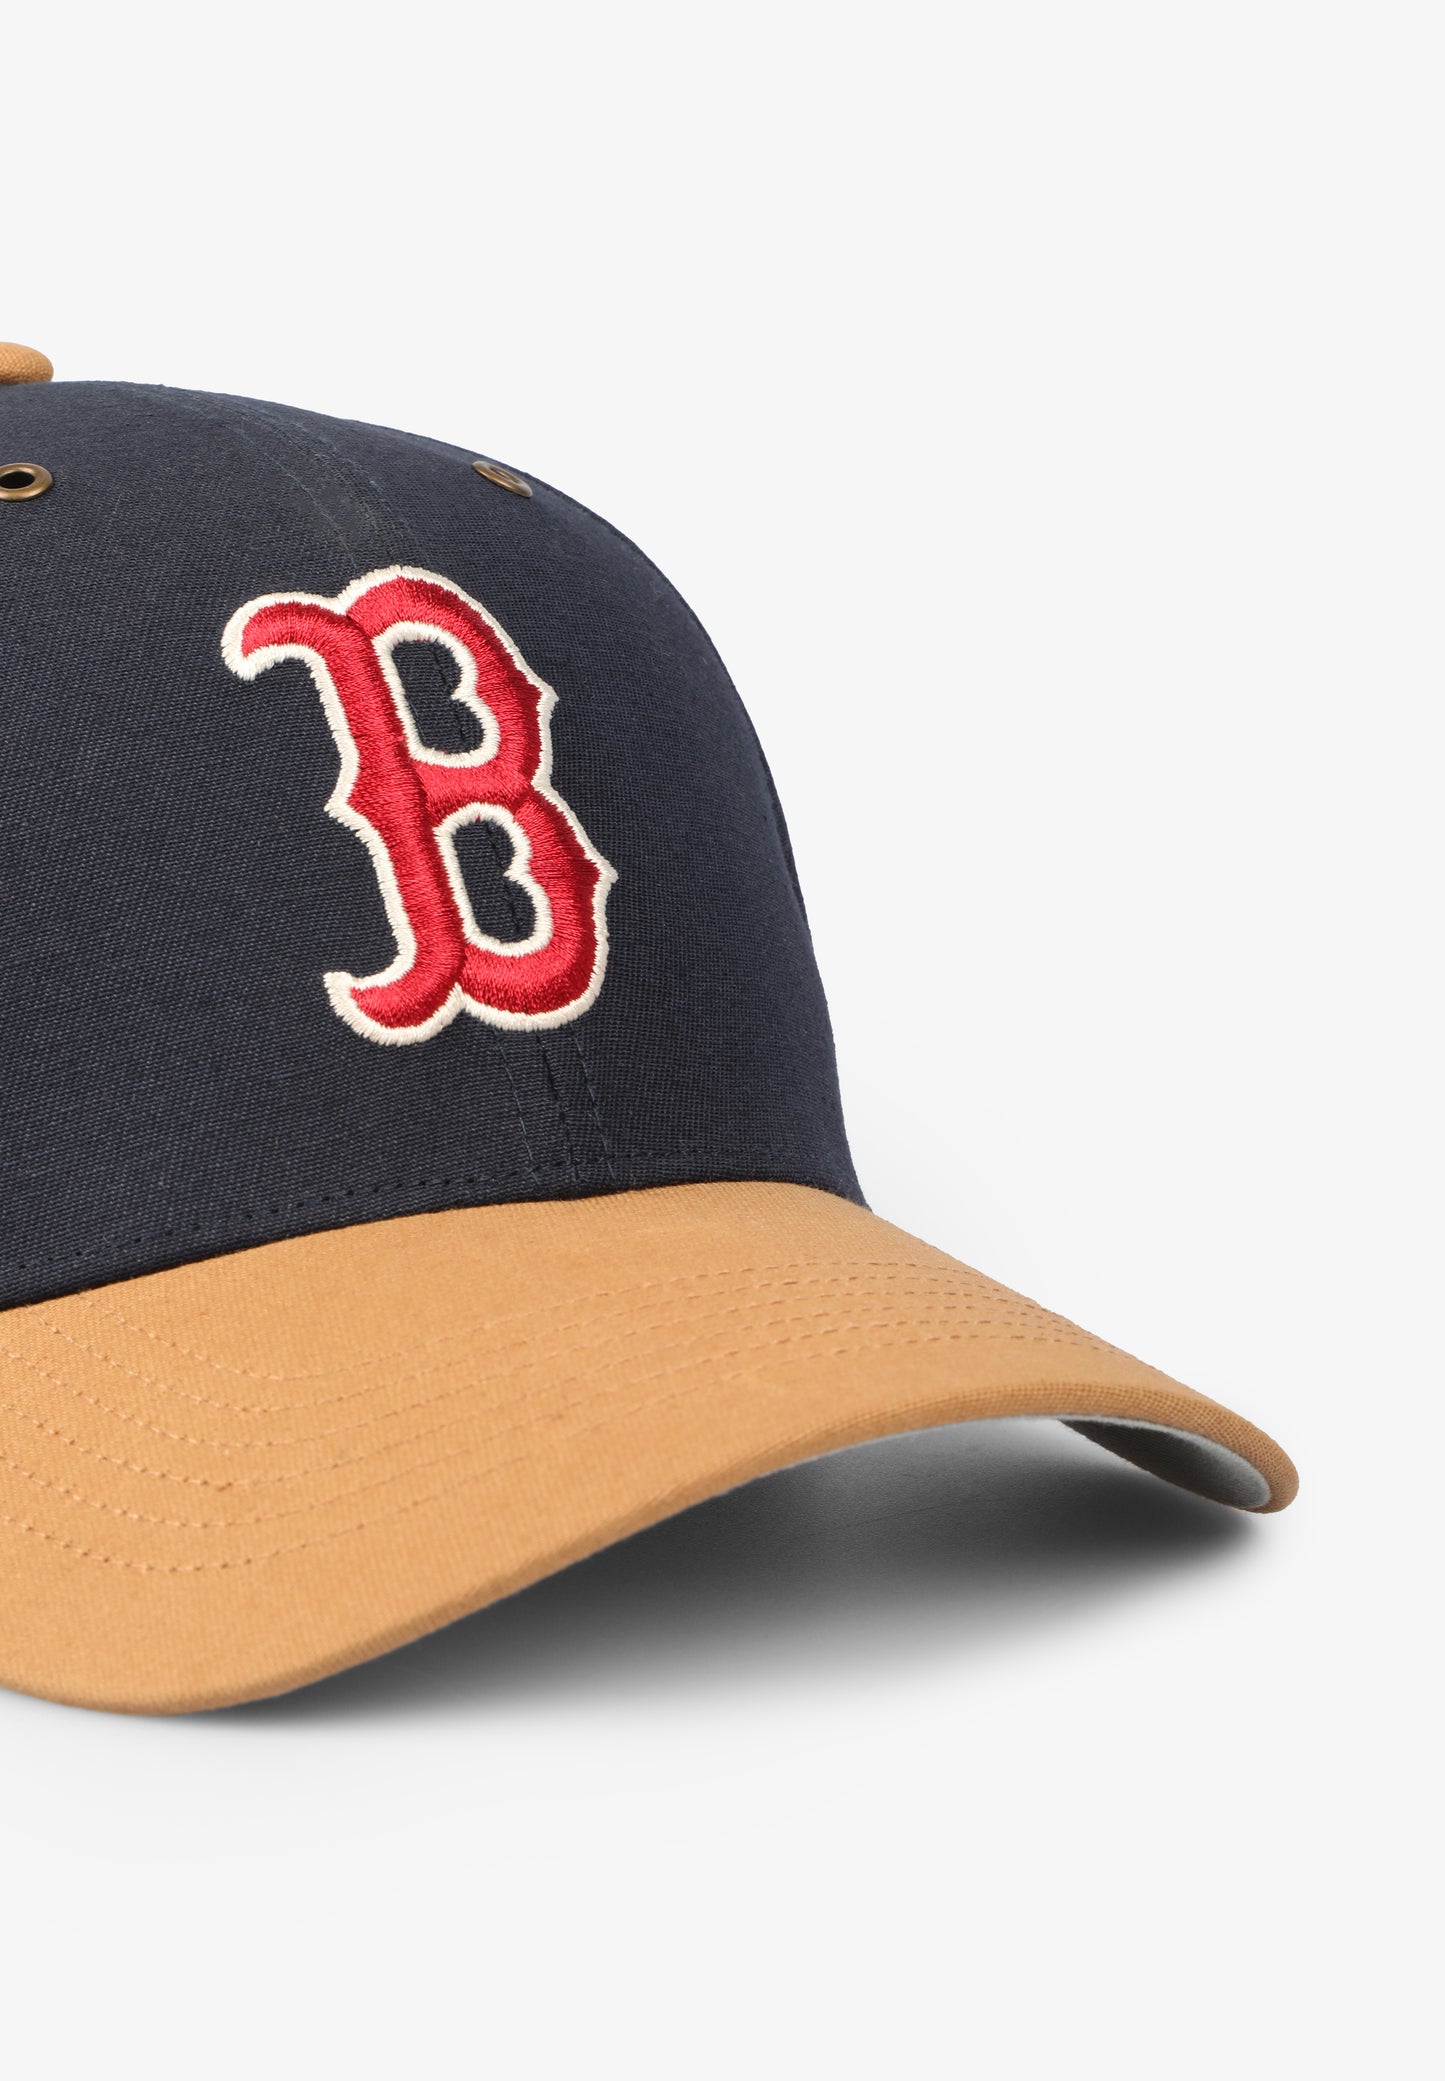 47 BRAND | GORRA MLB BOSTON RED SOX CAMPUS